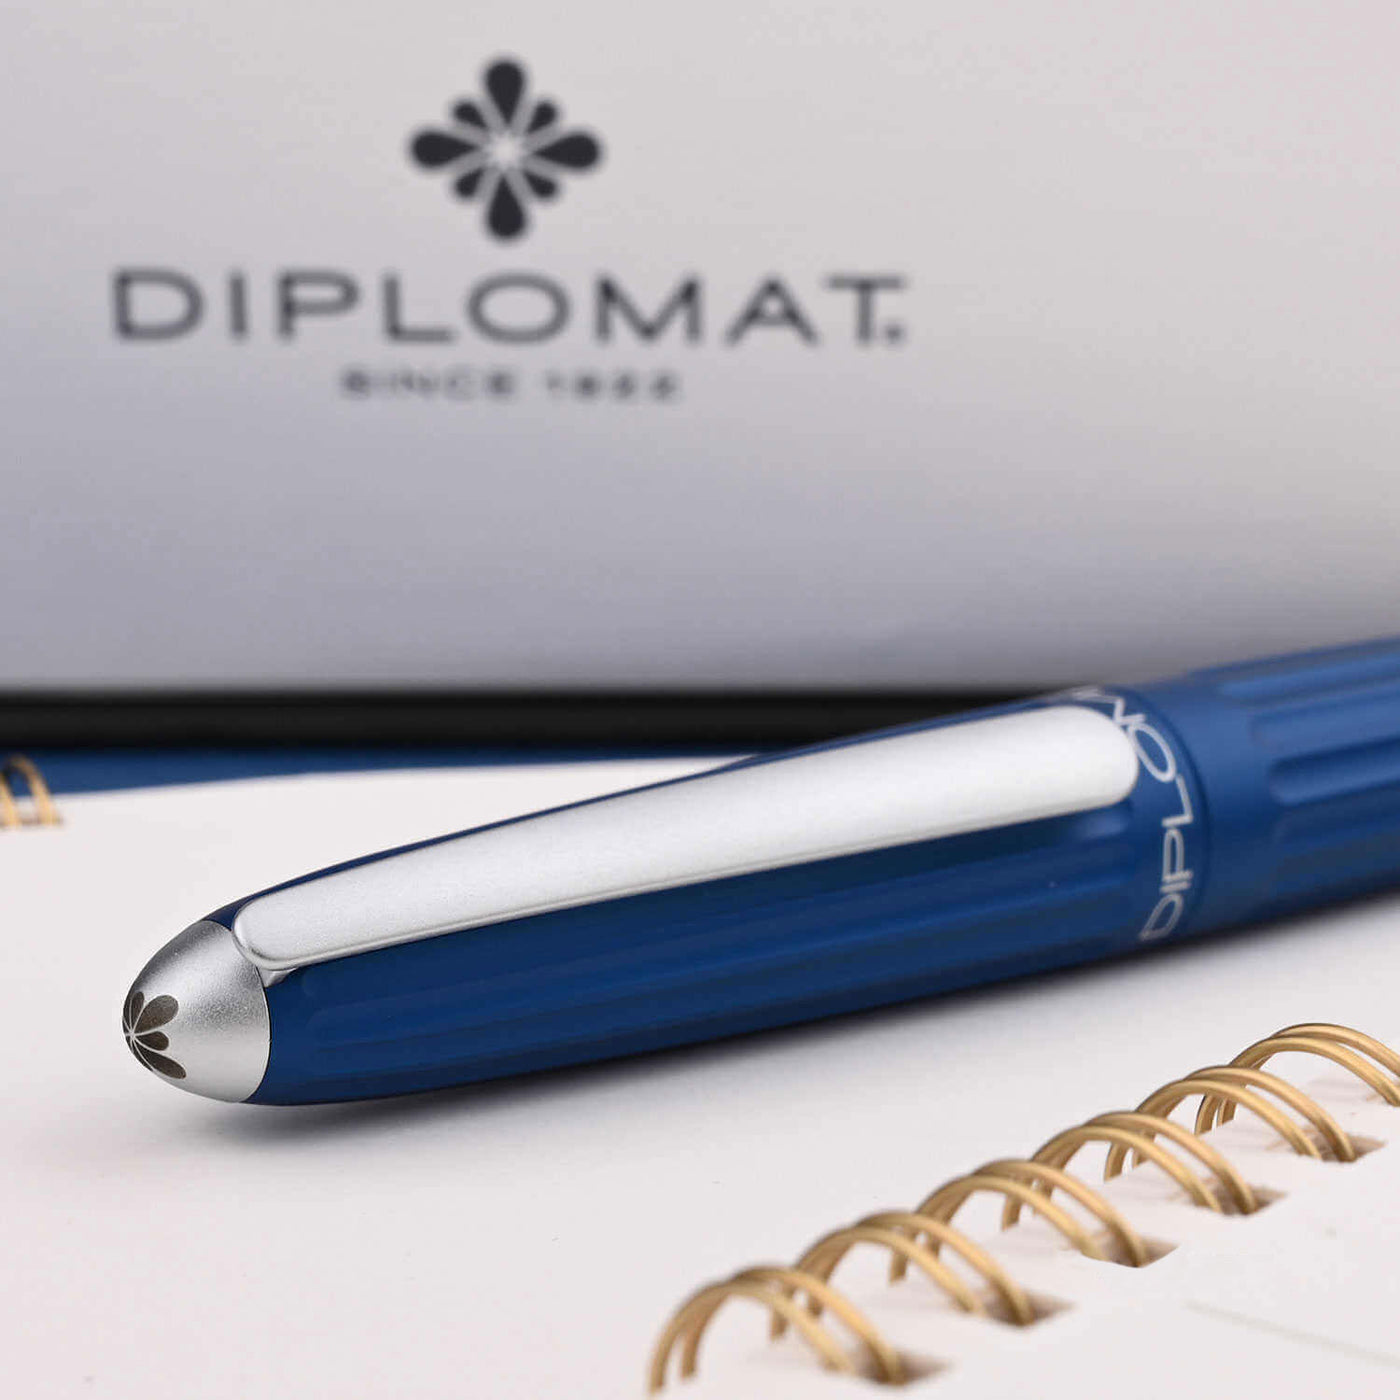 Diplomat Aero Mechanical Pencil, Blue - 0.7mm